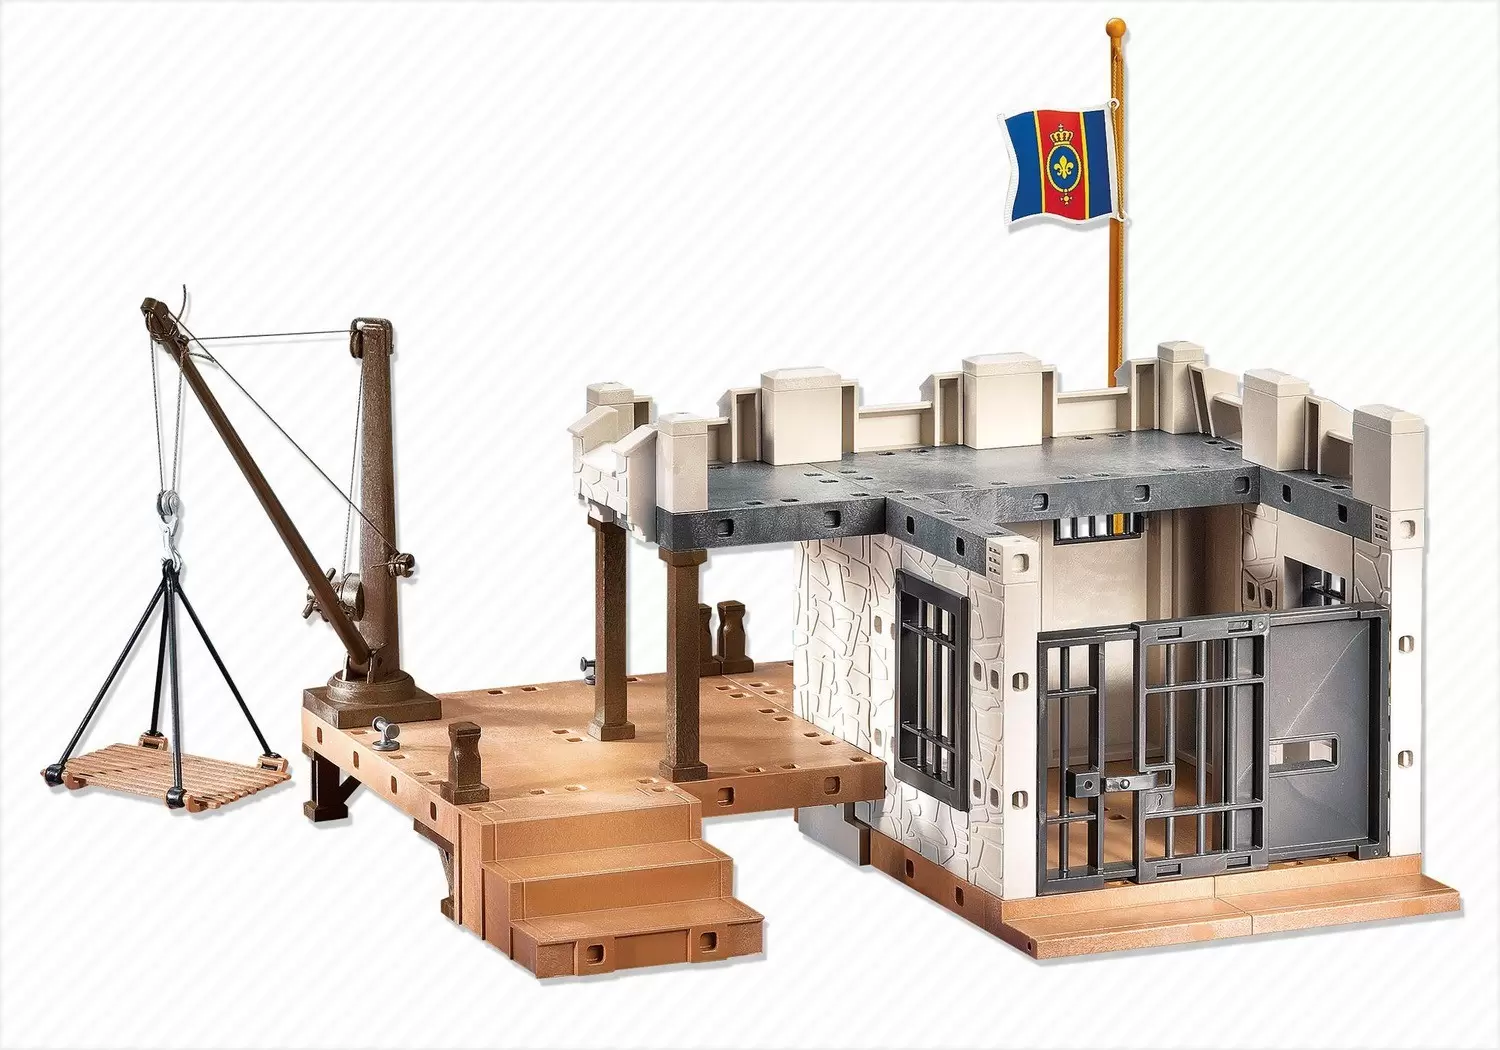 Pirate Playmobil - Prison fortress